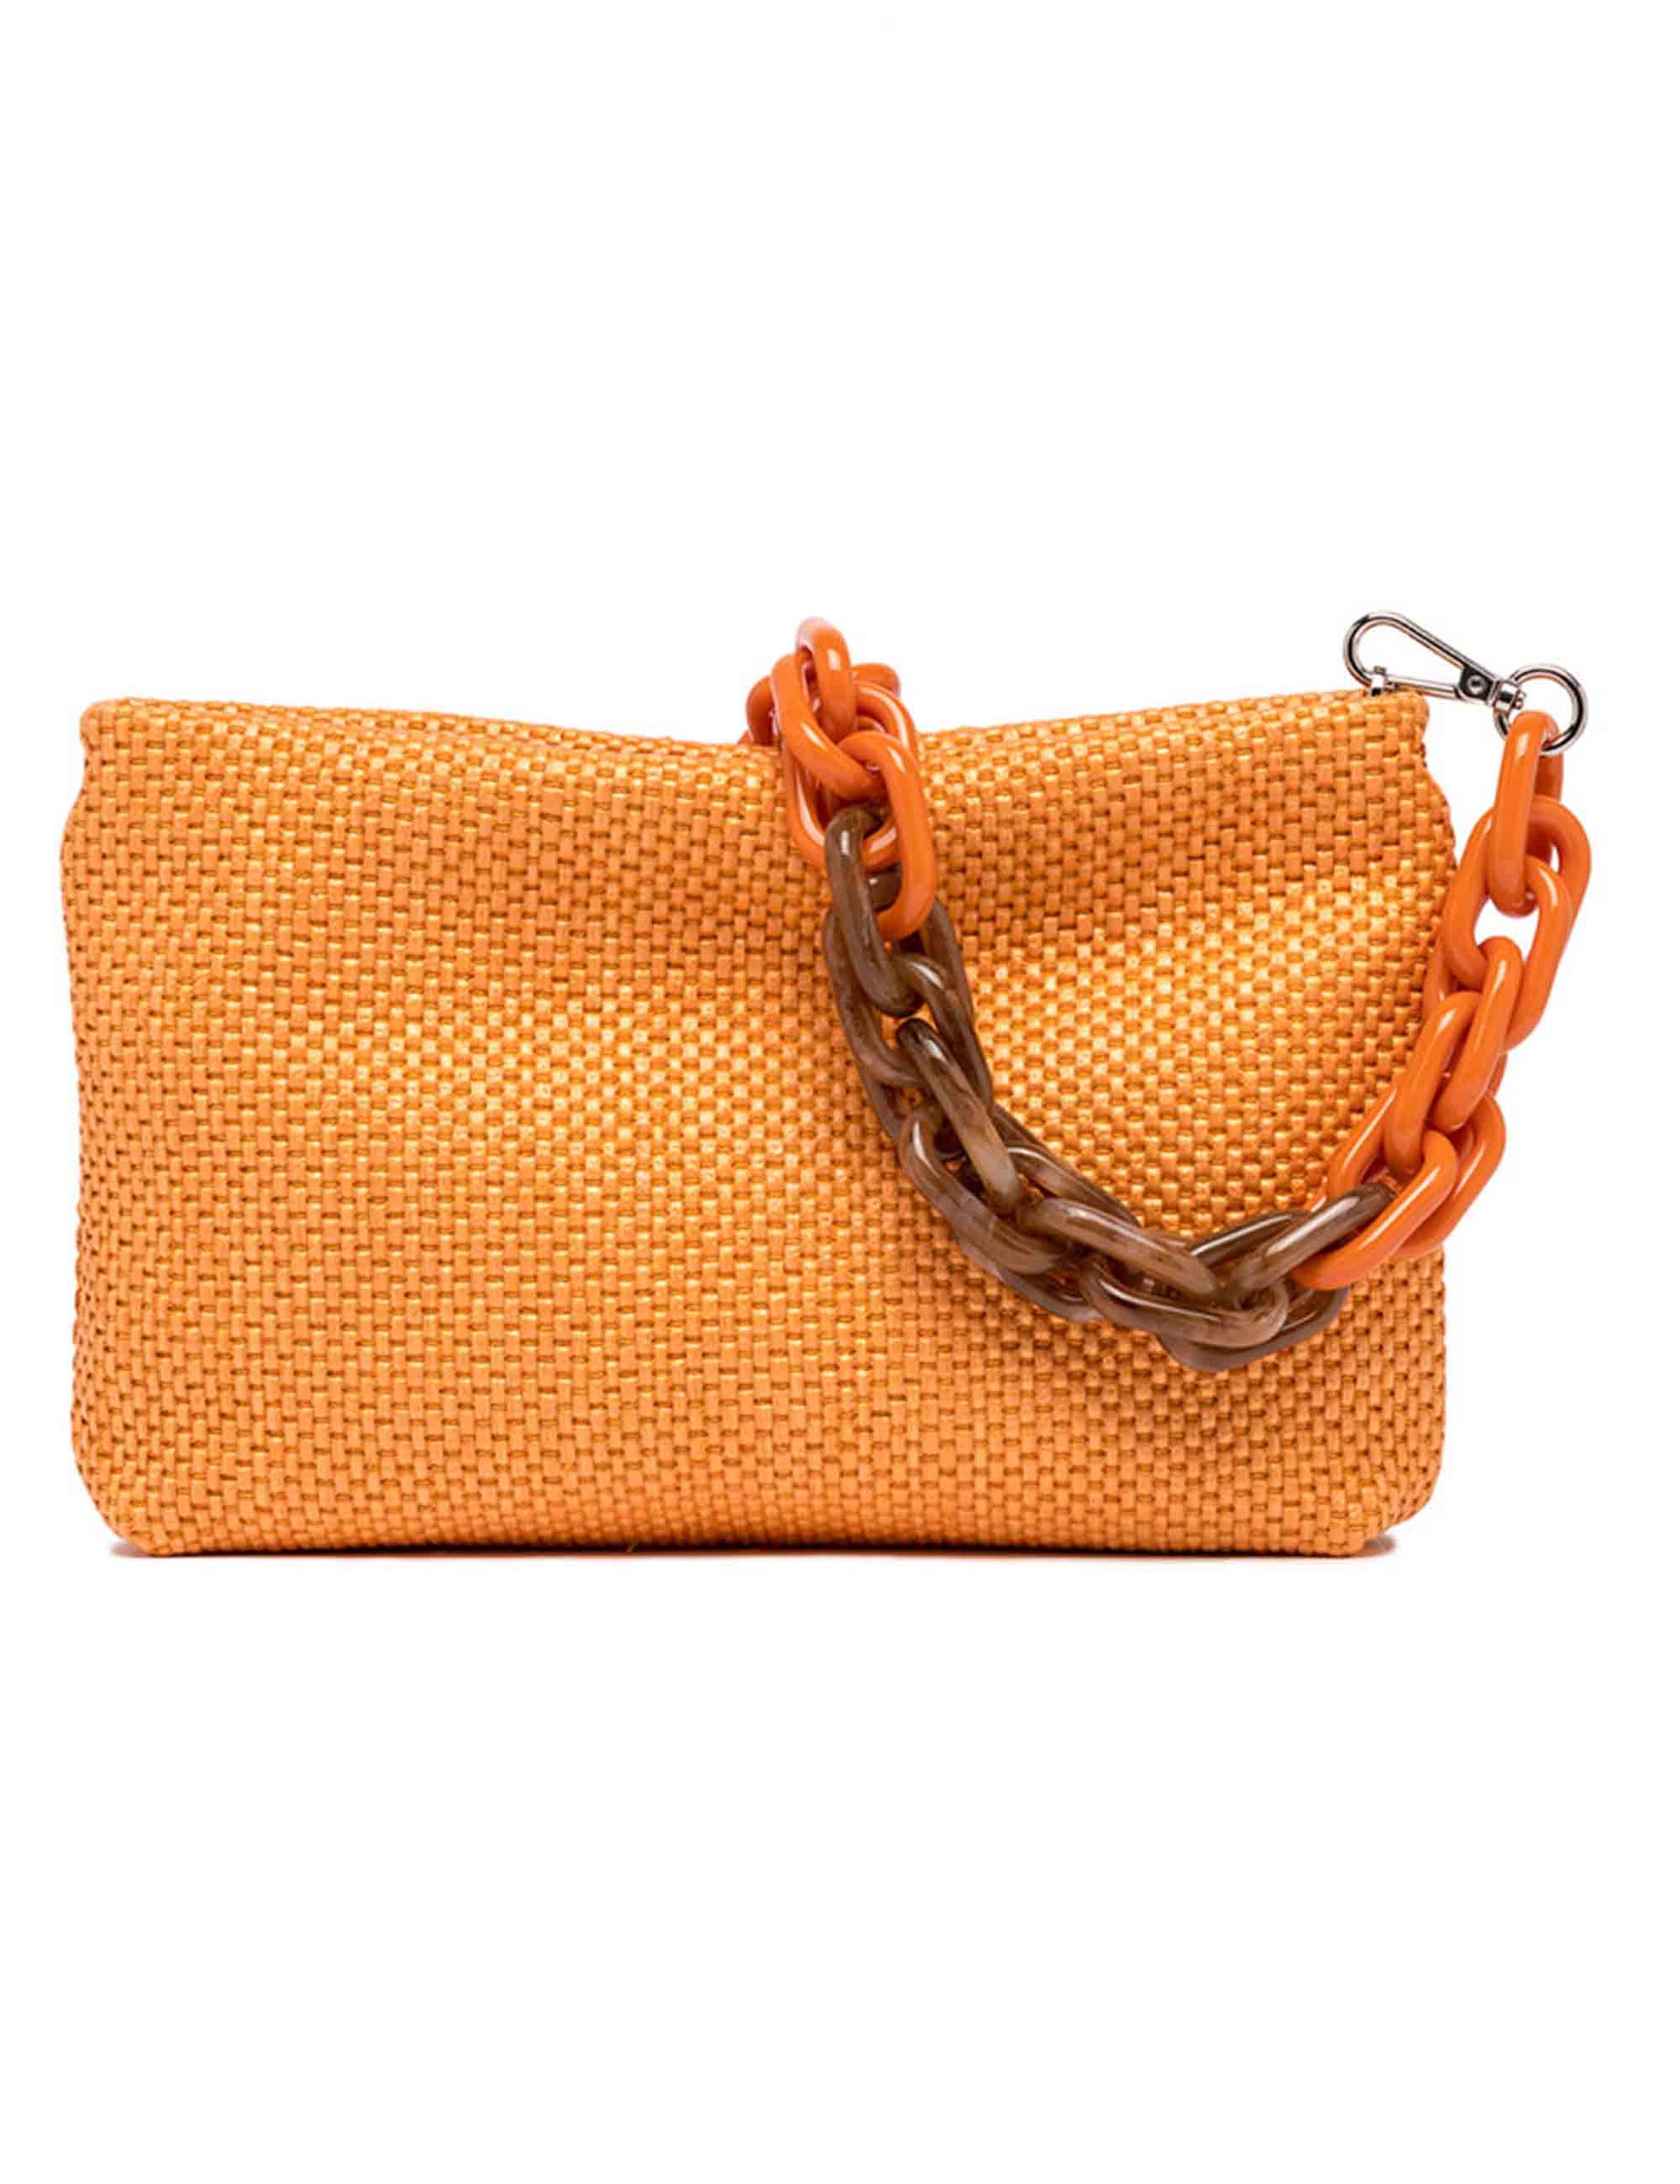 Brenda women's shoulder bags in orange fabric with removable shoulder strap